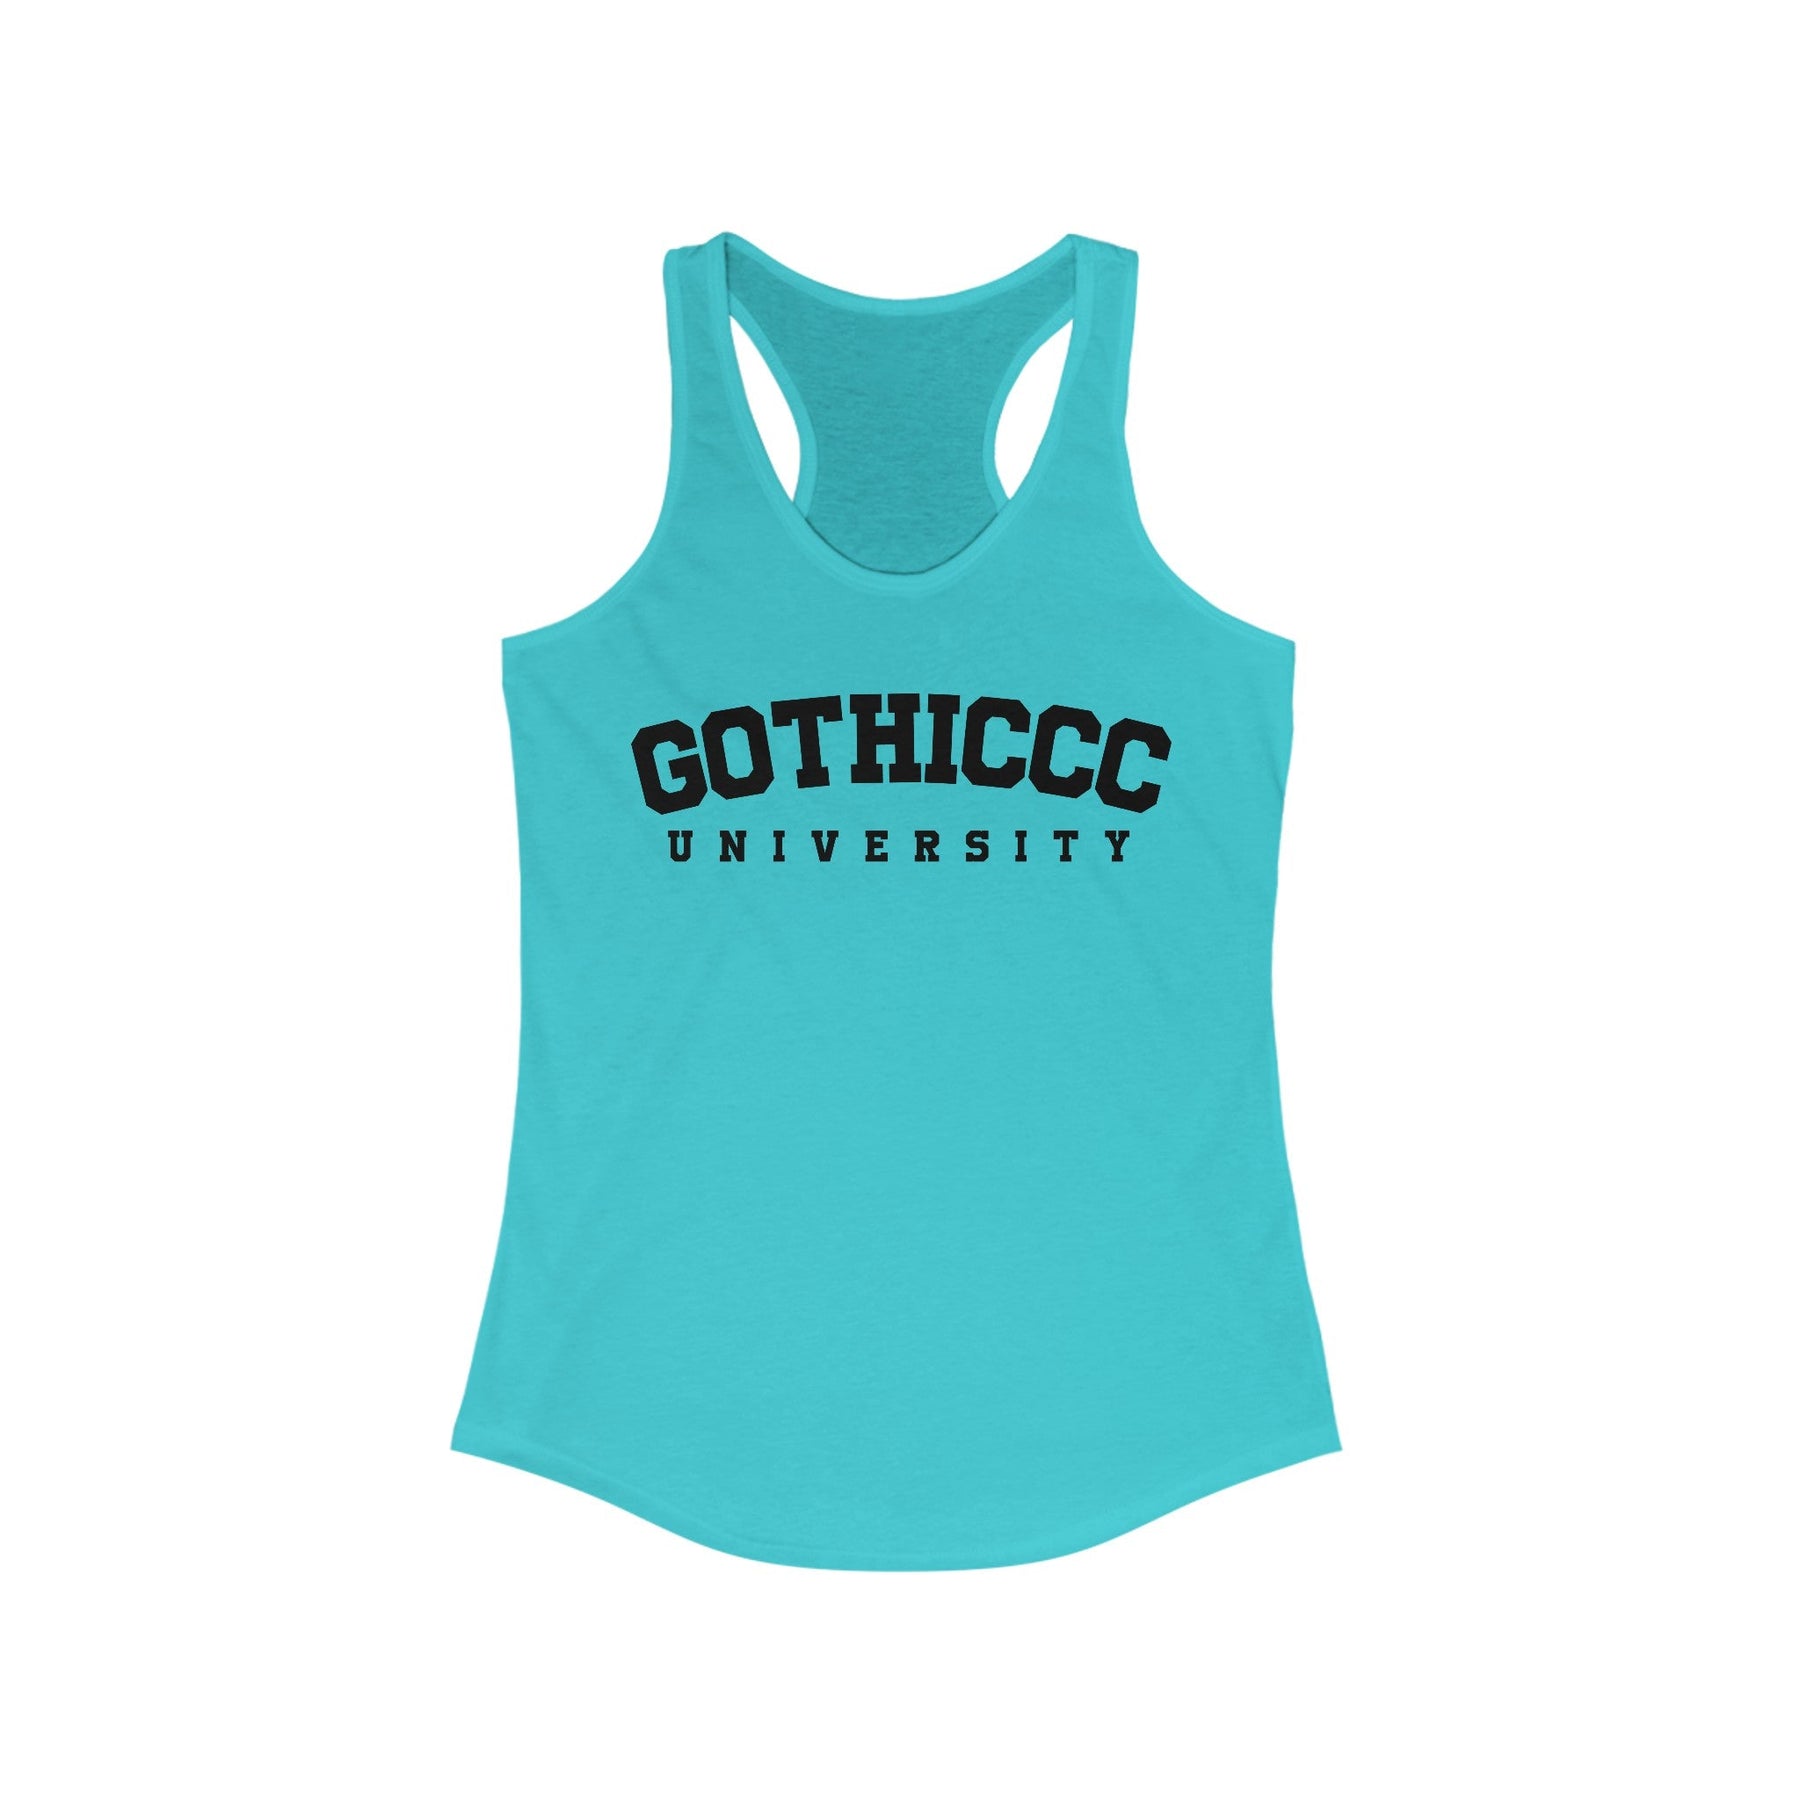 Gothiccc University Women's Racerback Tank - Goth Cloth Co.Tank Top17523286635023383555